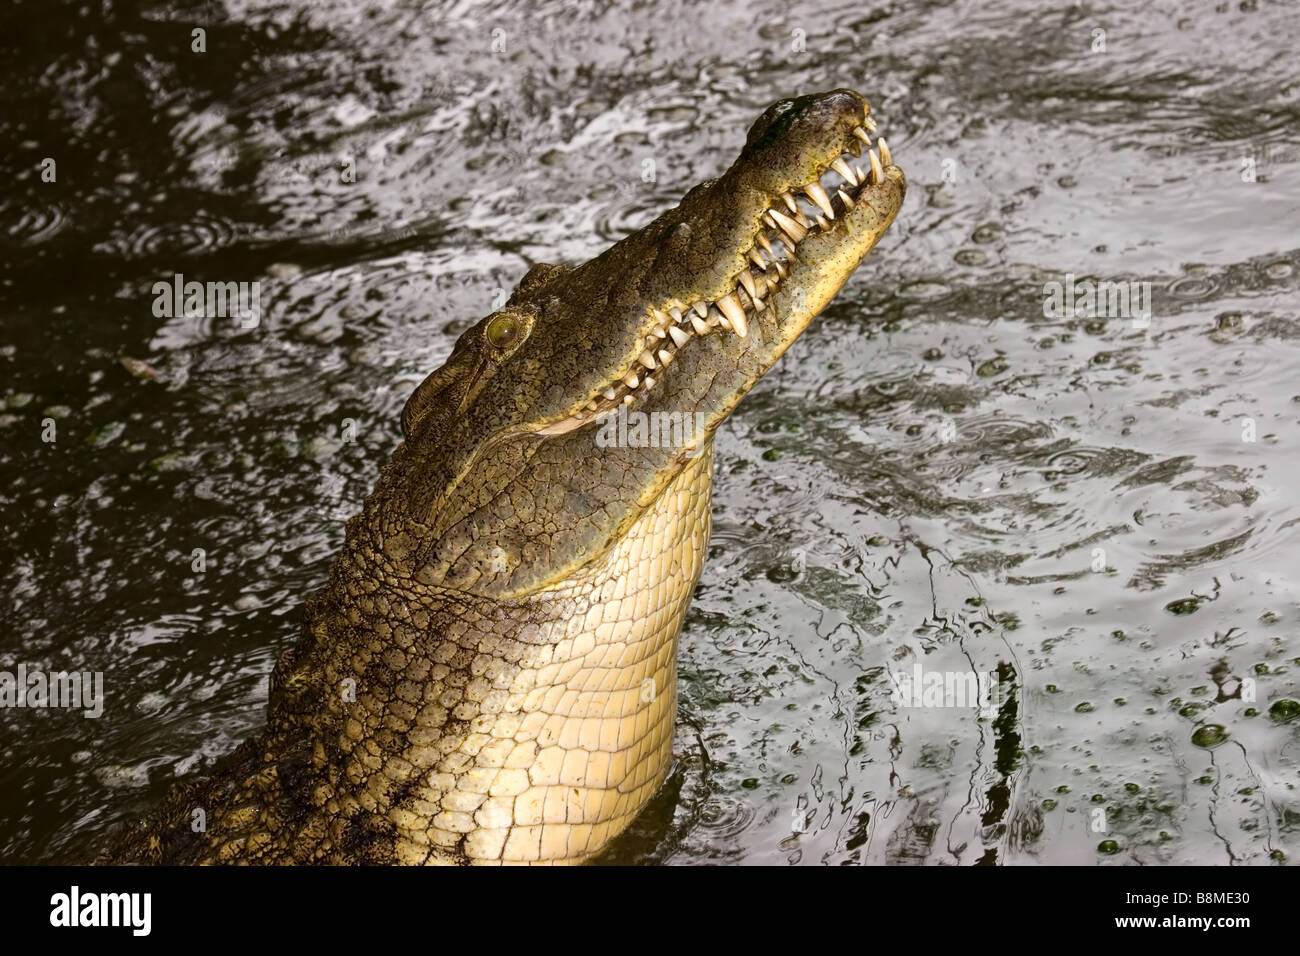 Portrait of an aggressive nile crocodile (Crocodylus niloticus), southern Africa Stock Photo